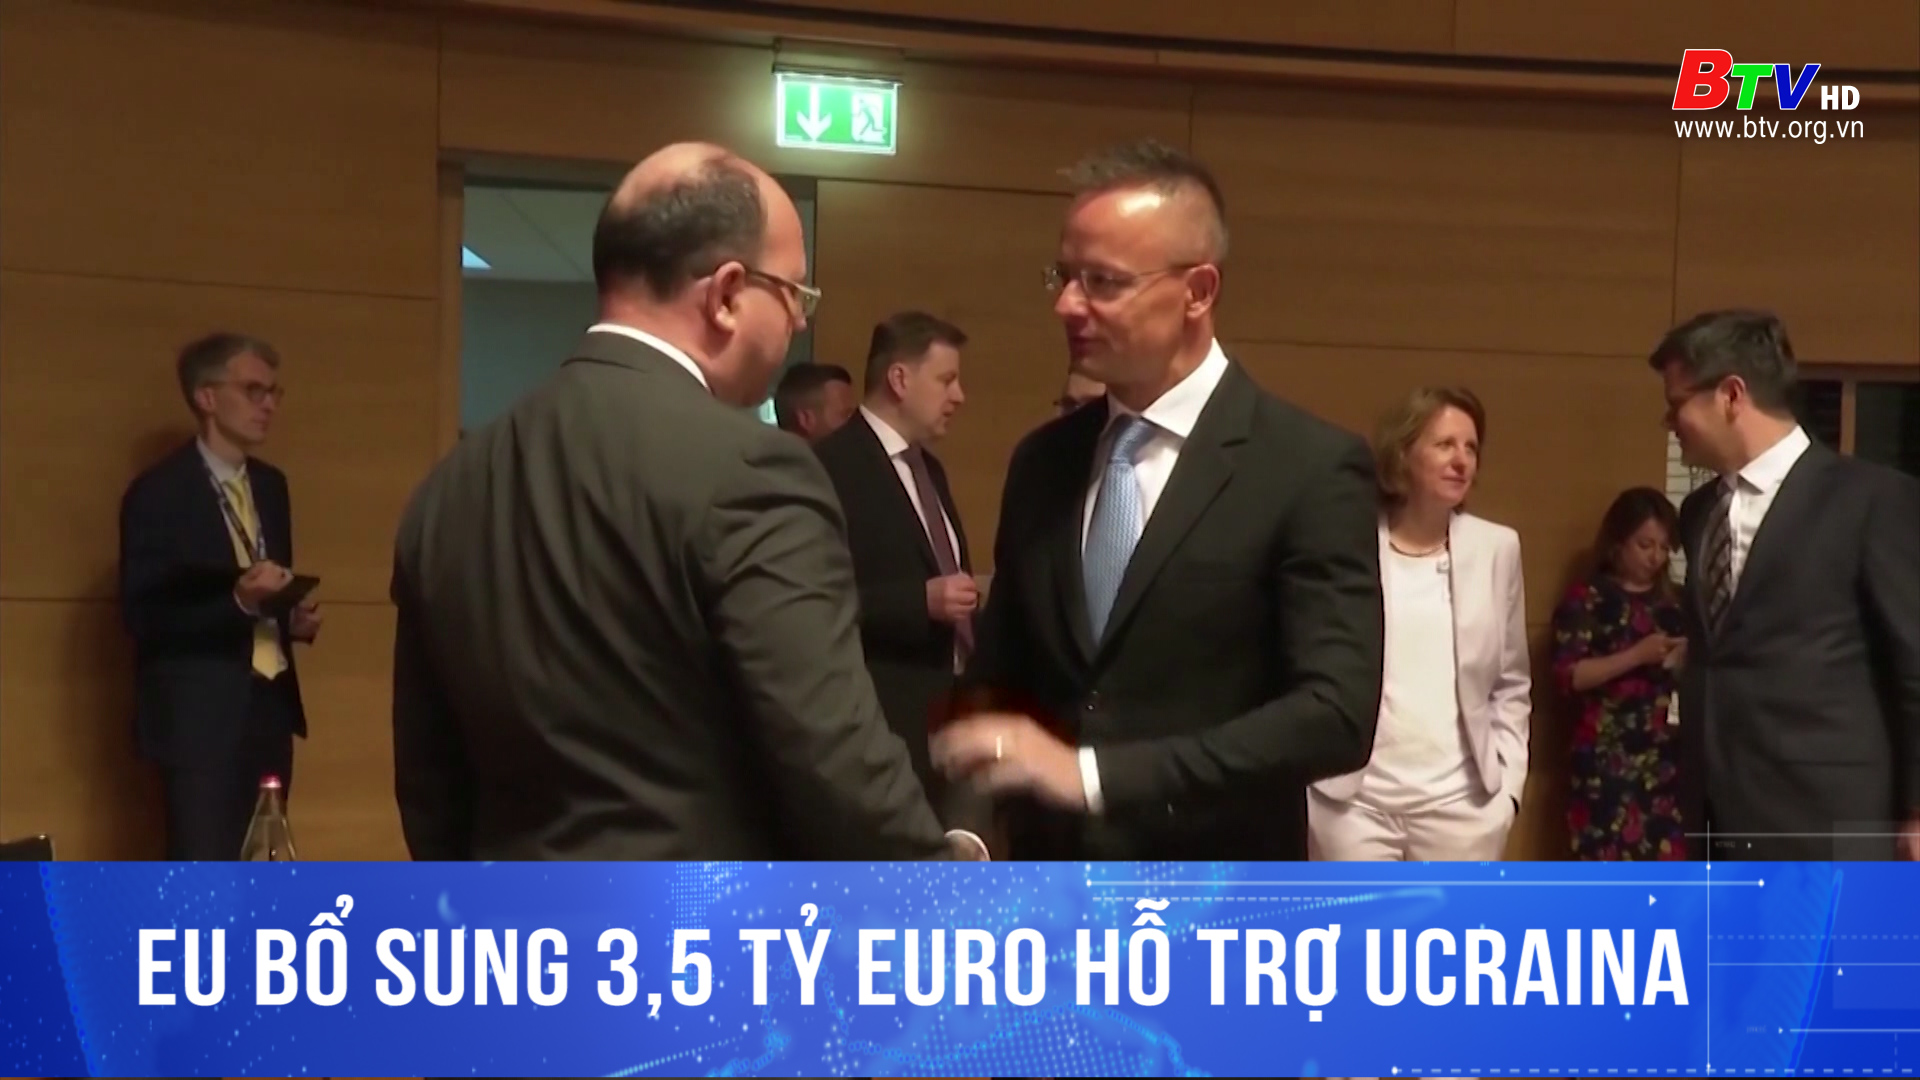 EU bổ sung 3,5 tỷ Euro hỗ trợ Ucraina